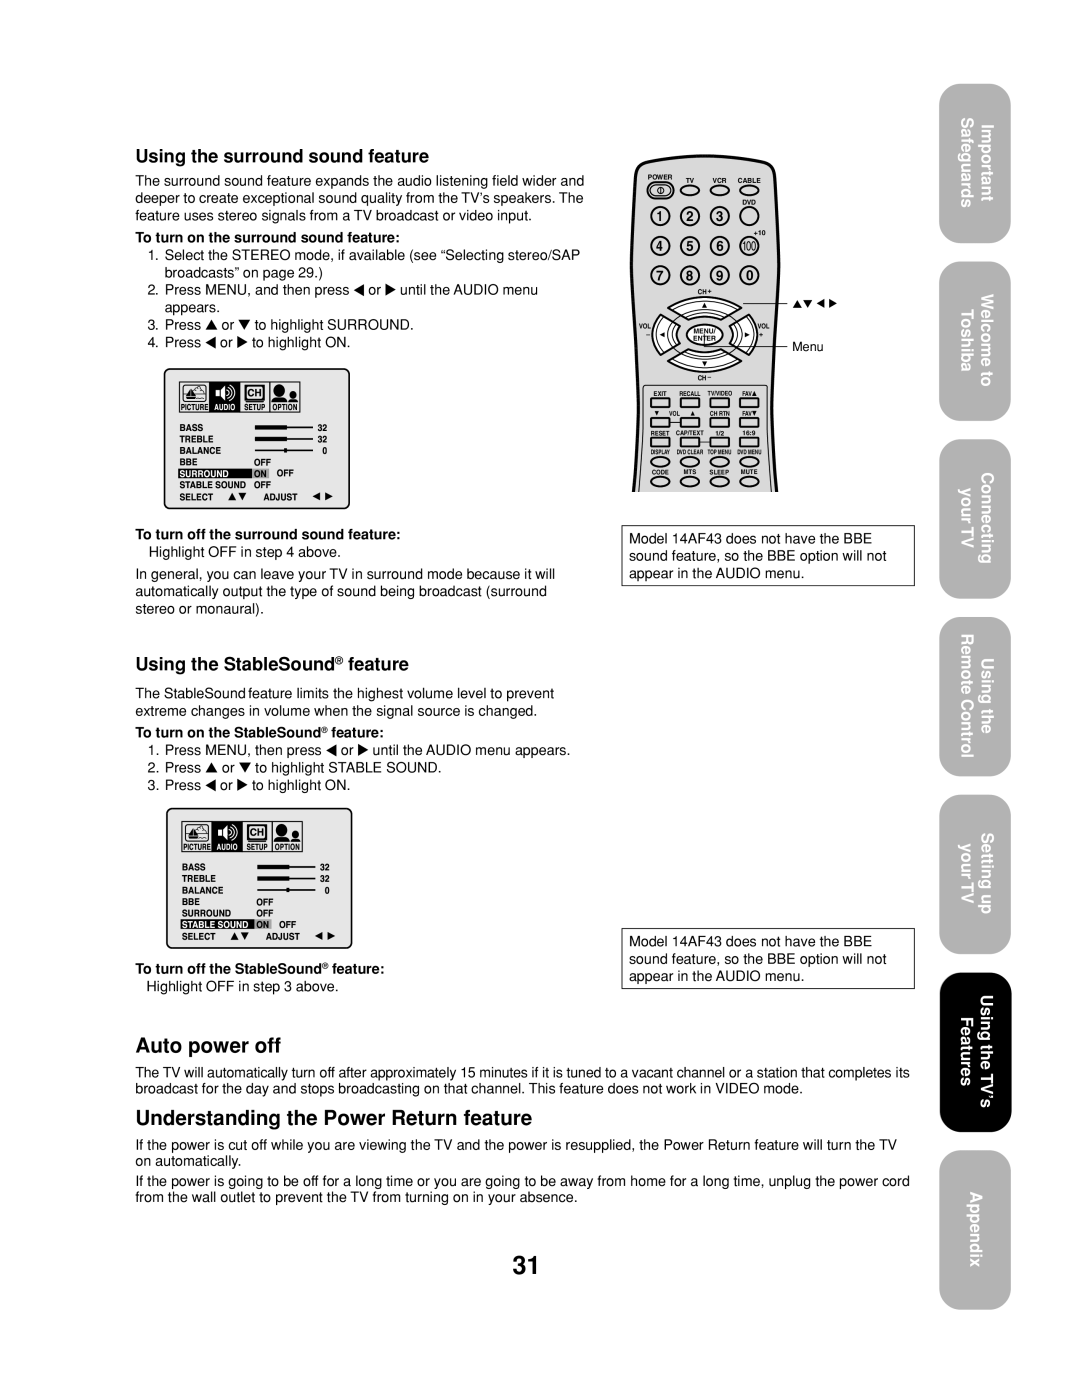 Toshiba 20AF43 TREBLSTABLURROELECTBELANEECEUNDSOUNDOFFNOFFADJUST0, Stablurroelecteundsoundoffnadjustoff, Auto power off 